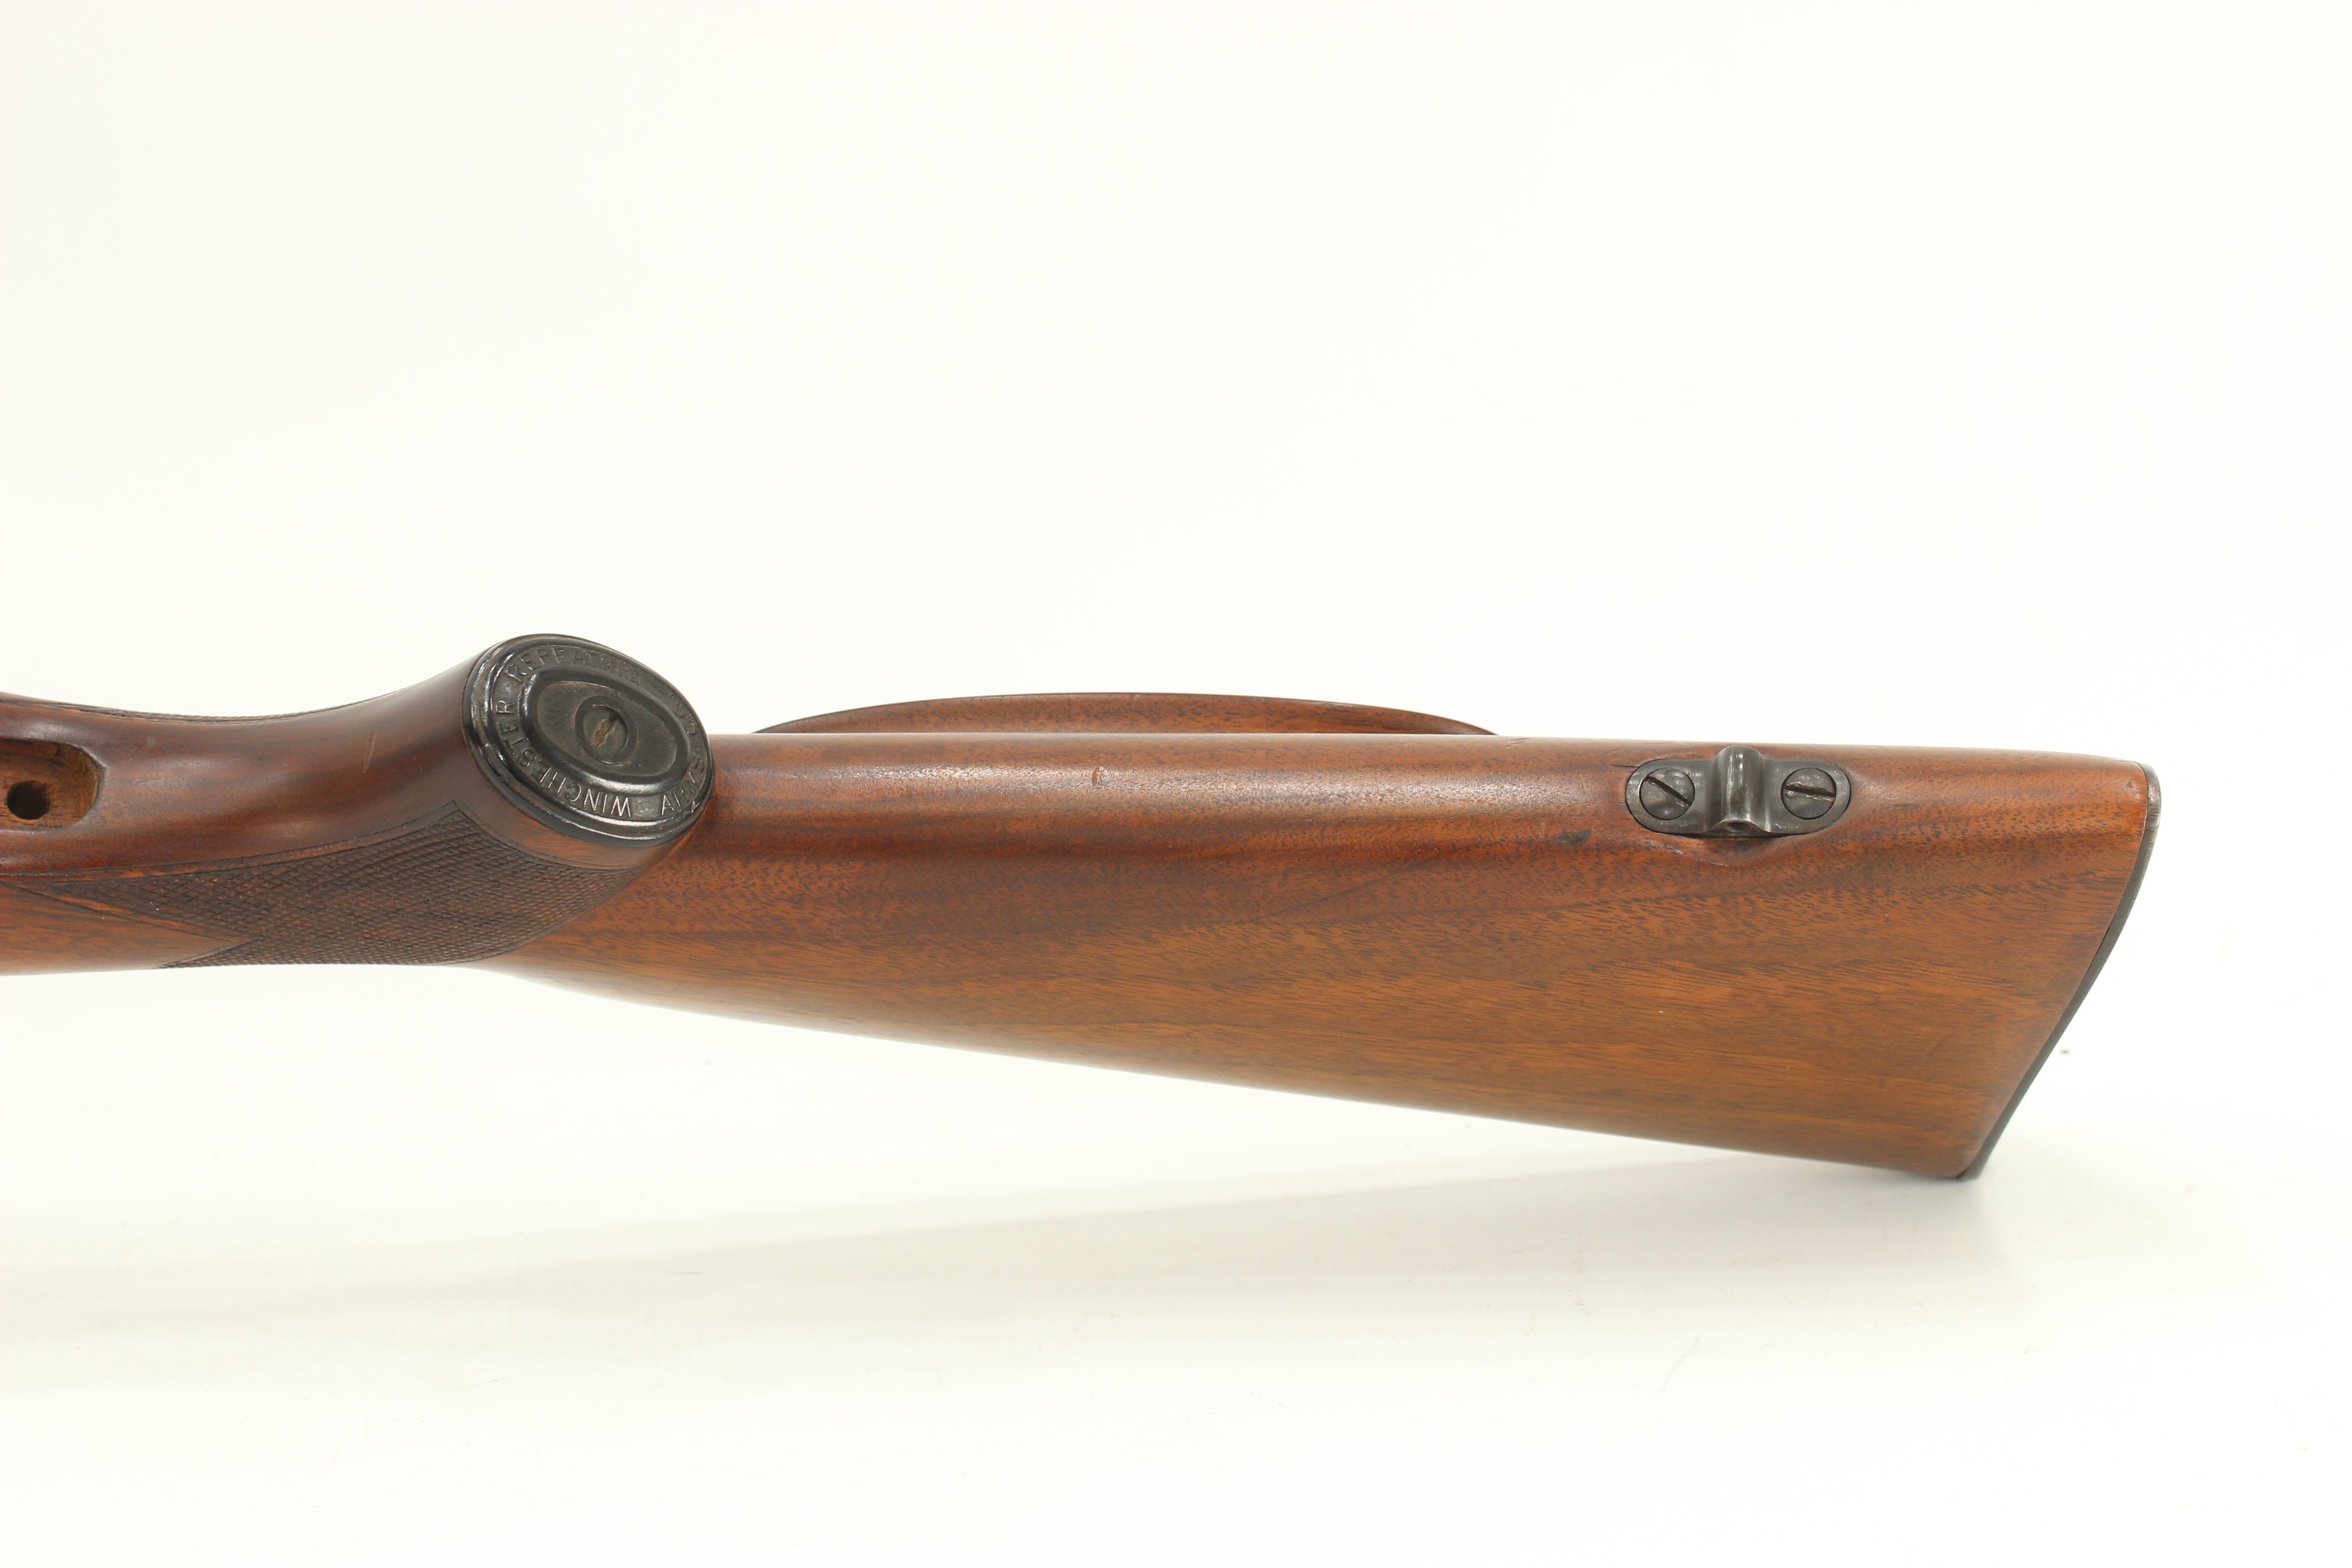 1948-1954 Low Comb Super Grade Rifle Stock